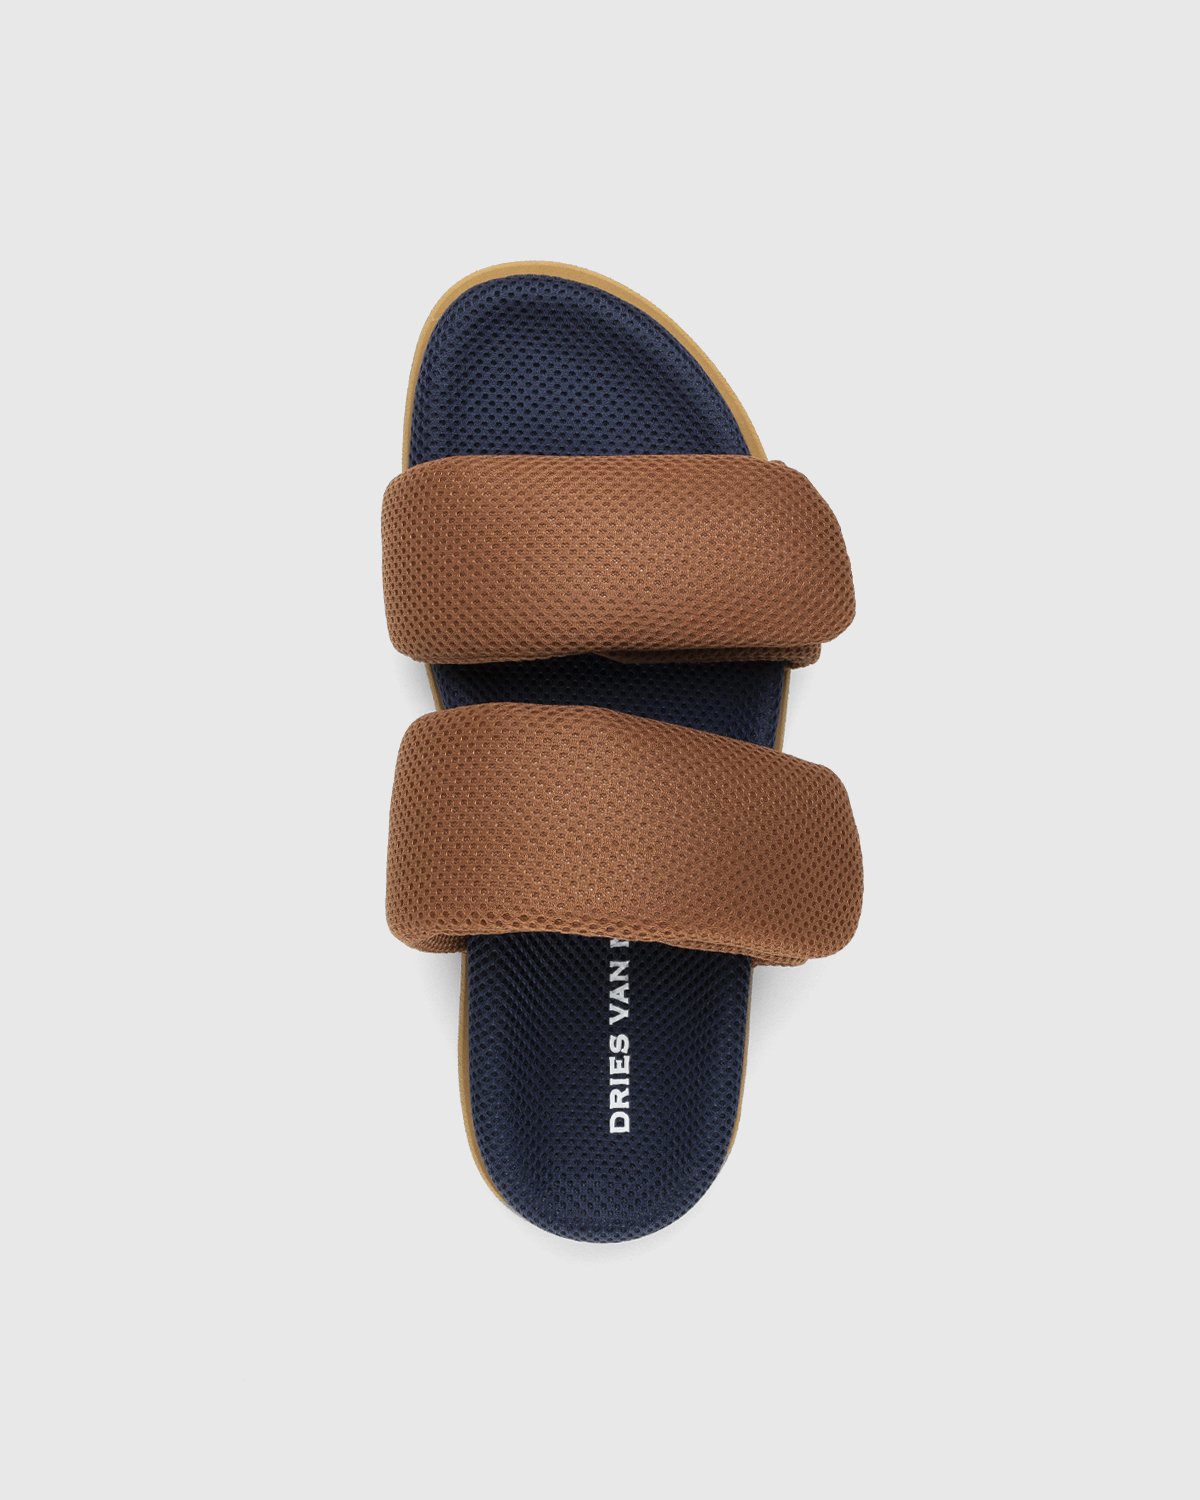 Dries van Noten - Double Strap Sandals Brown/Navy - Footwear - Brown - Image 5